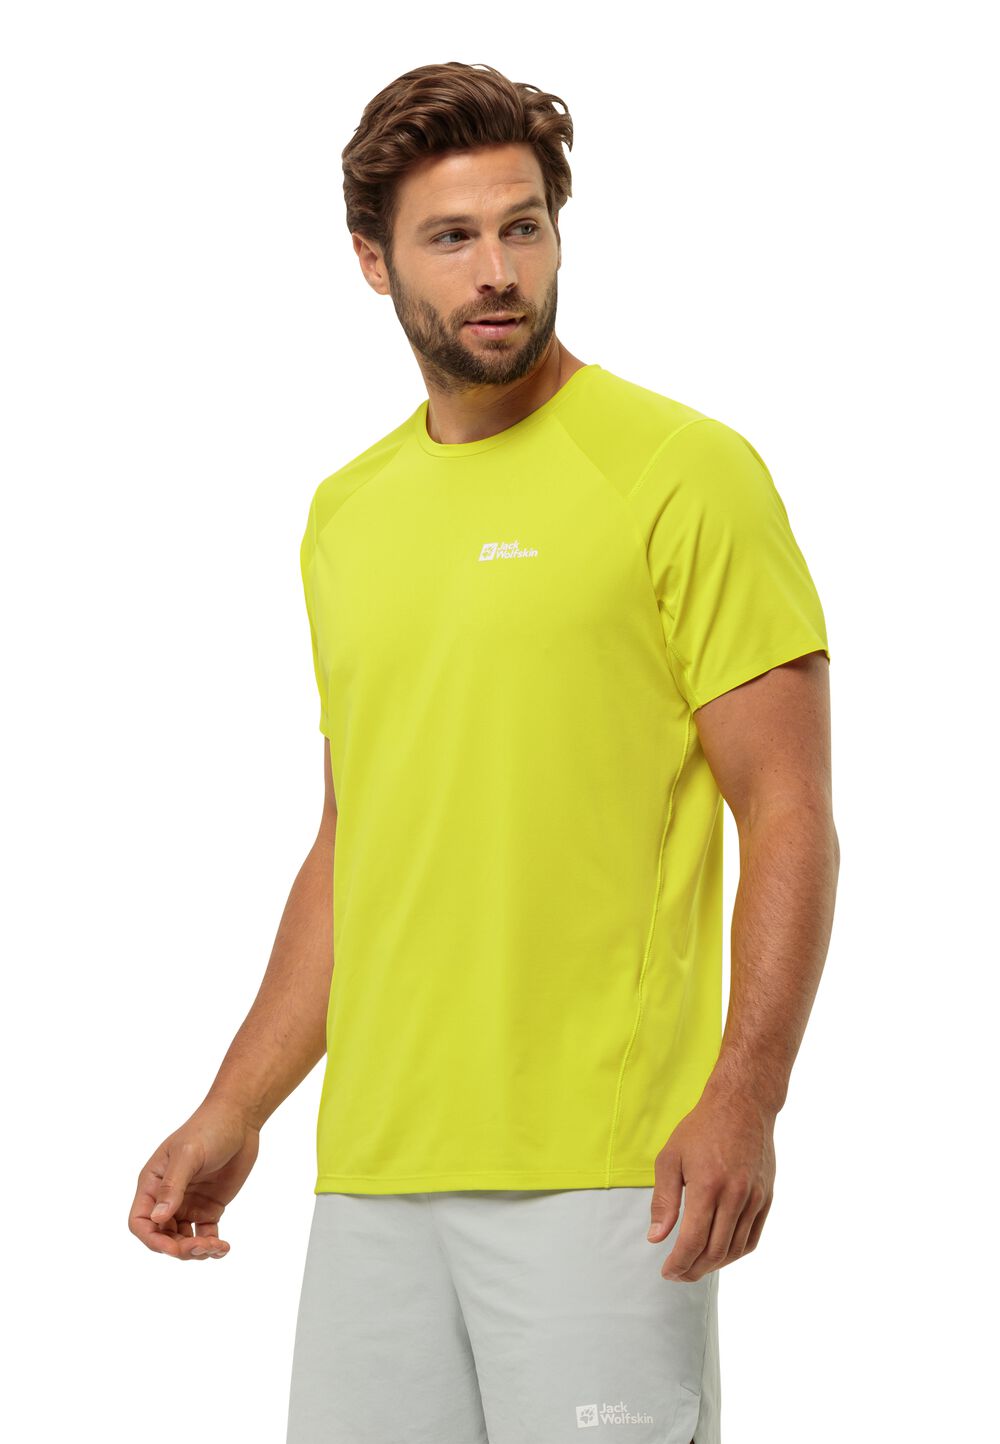 Jack Wolfskin Prelight Chill T-Shirt Men Functioneel shirt Heren M oranje firefly